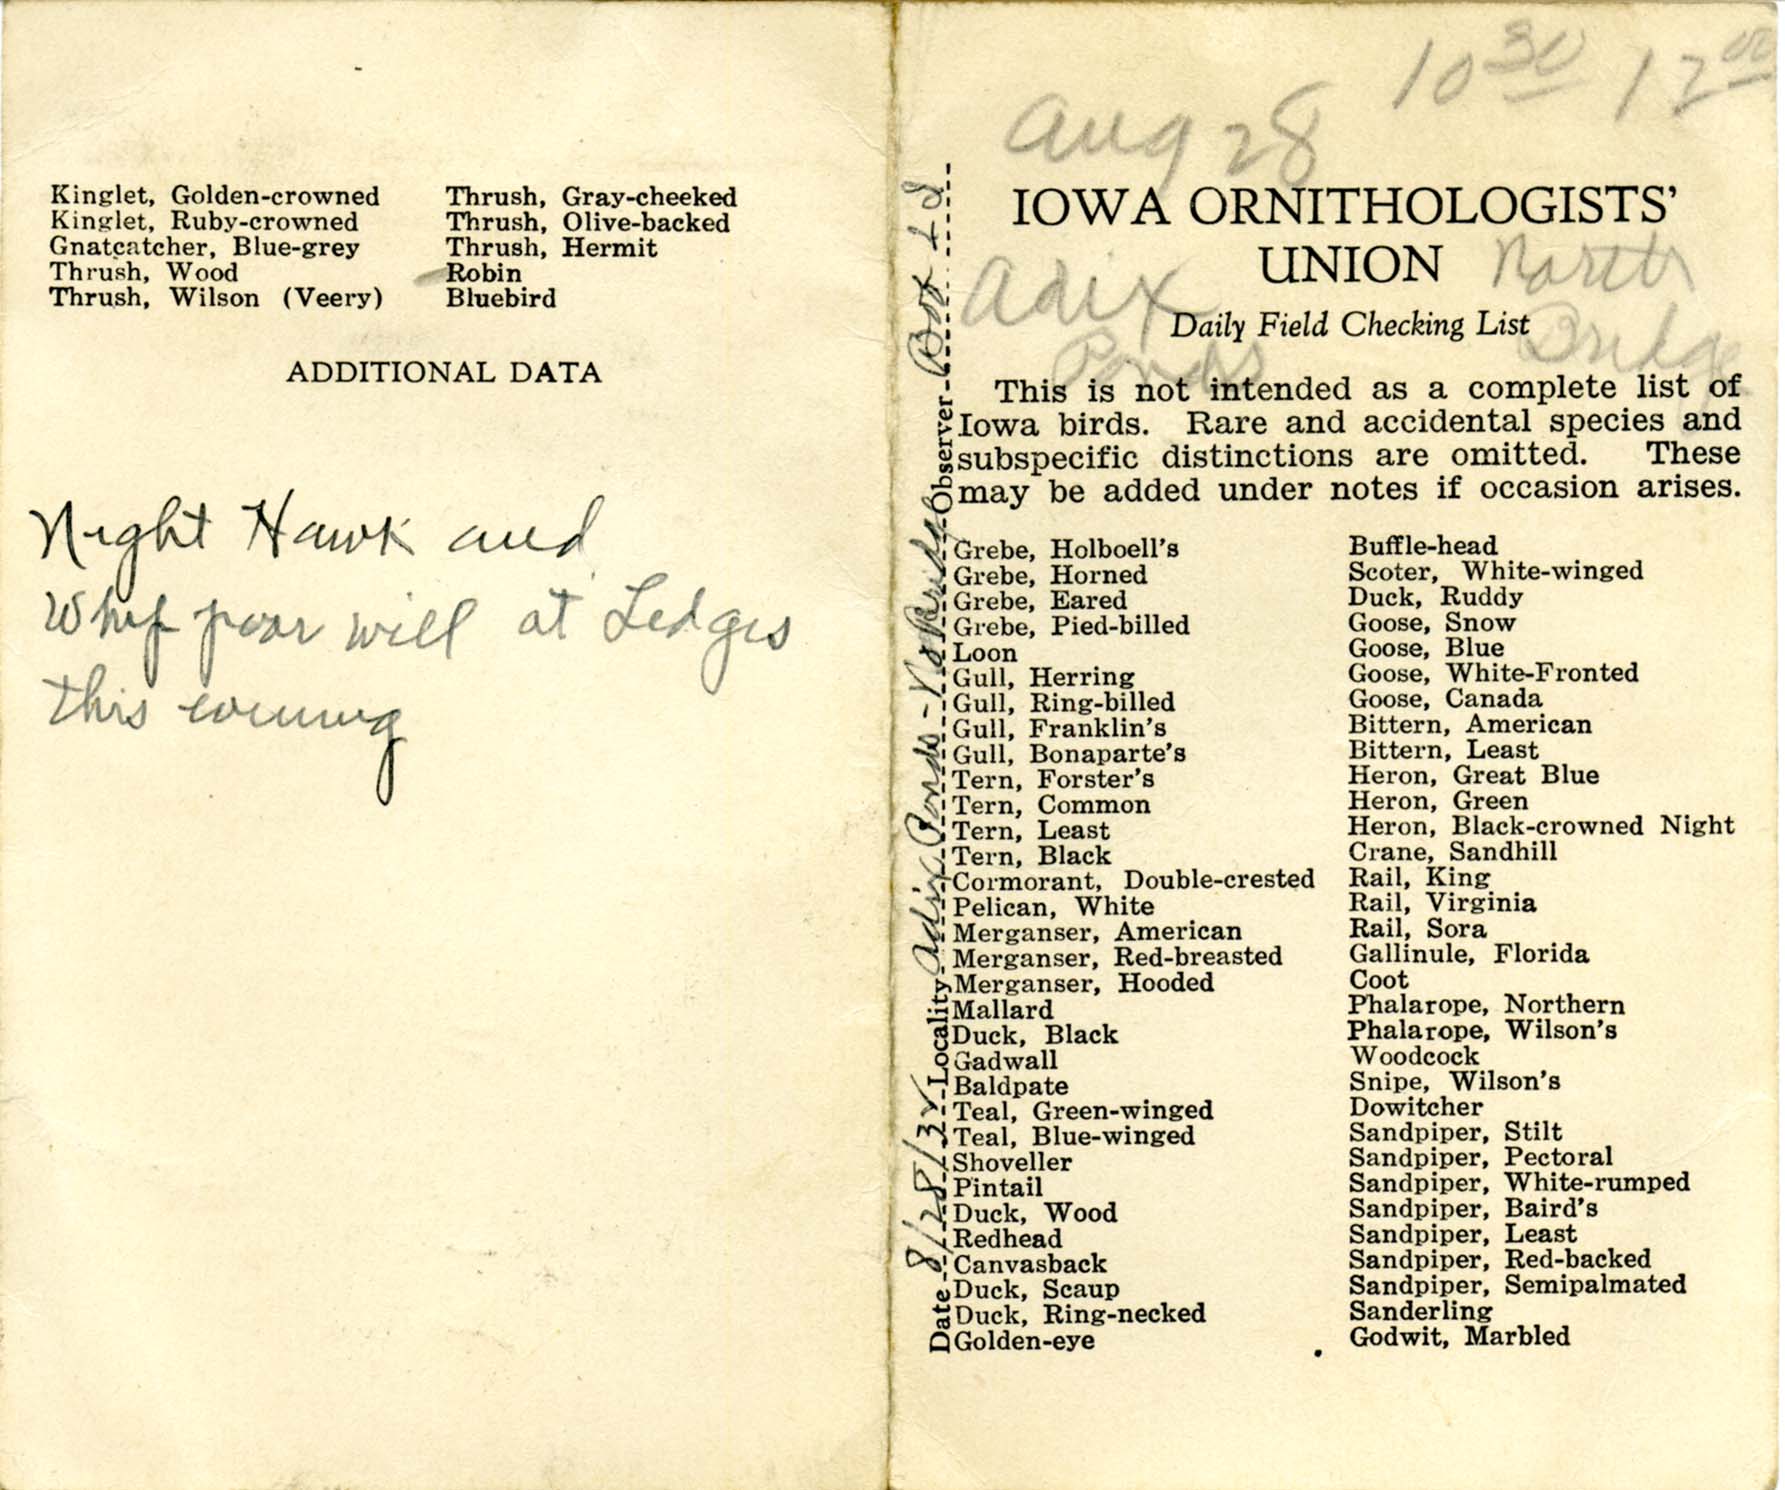 Daily field checking list, Walter Rosene, August 28, 1932